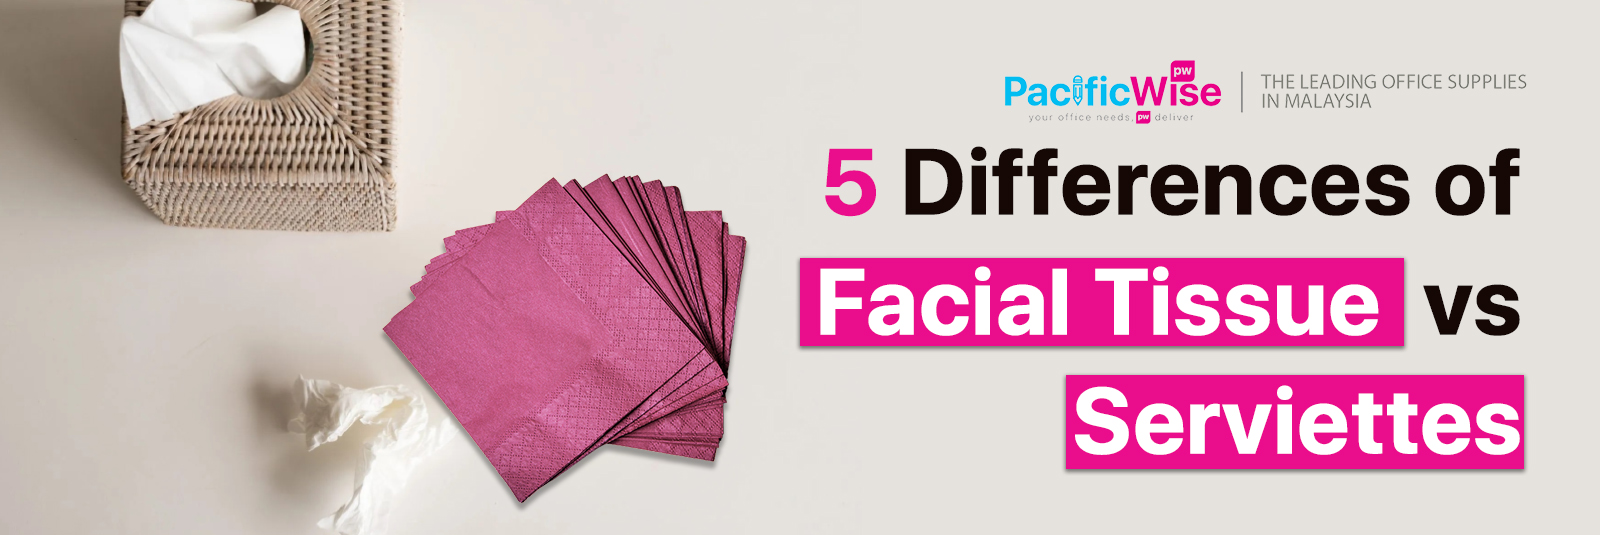 5 Differences of Facial Tissue vs Serviettes